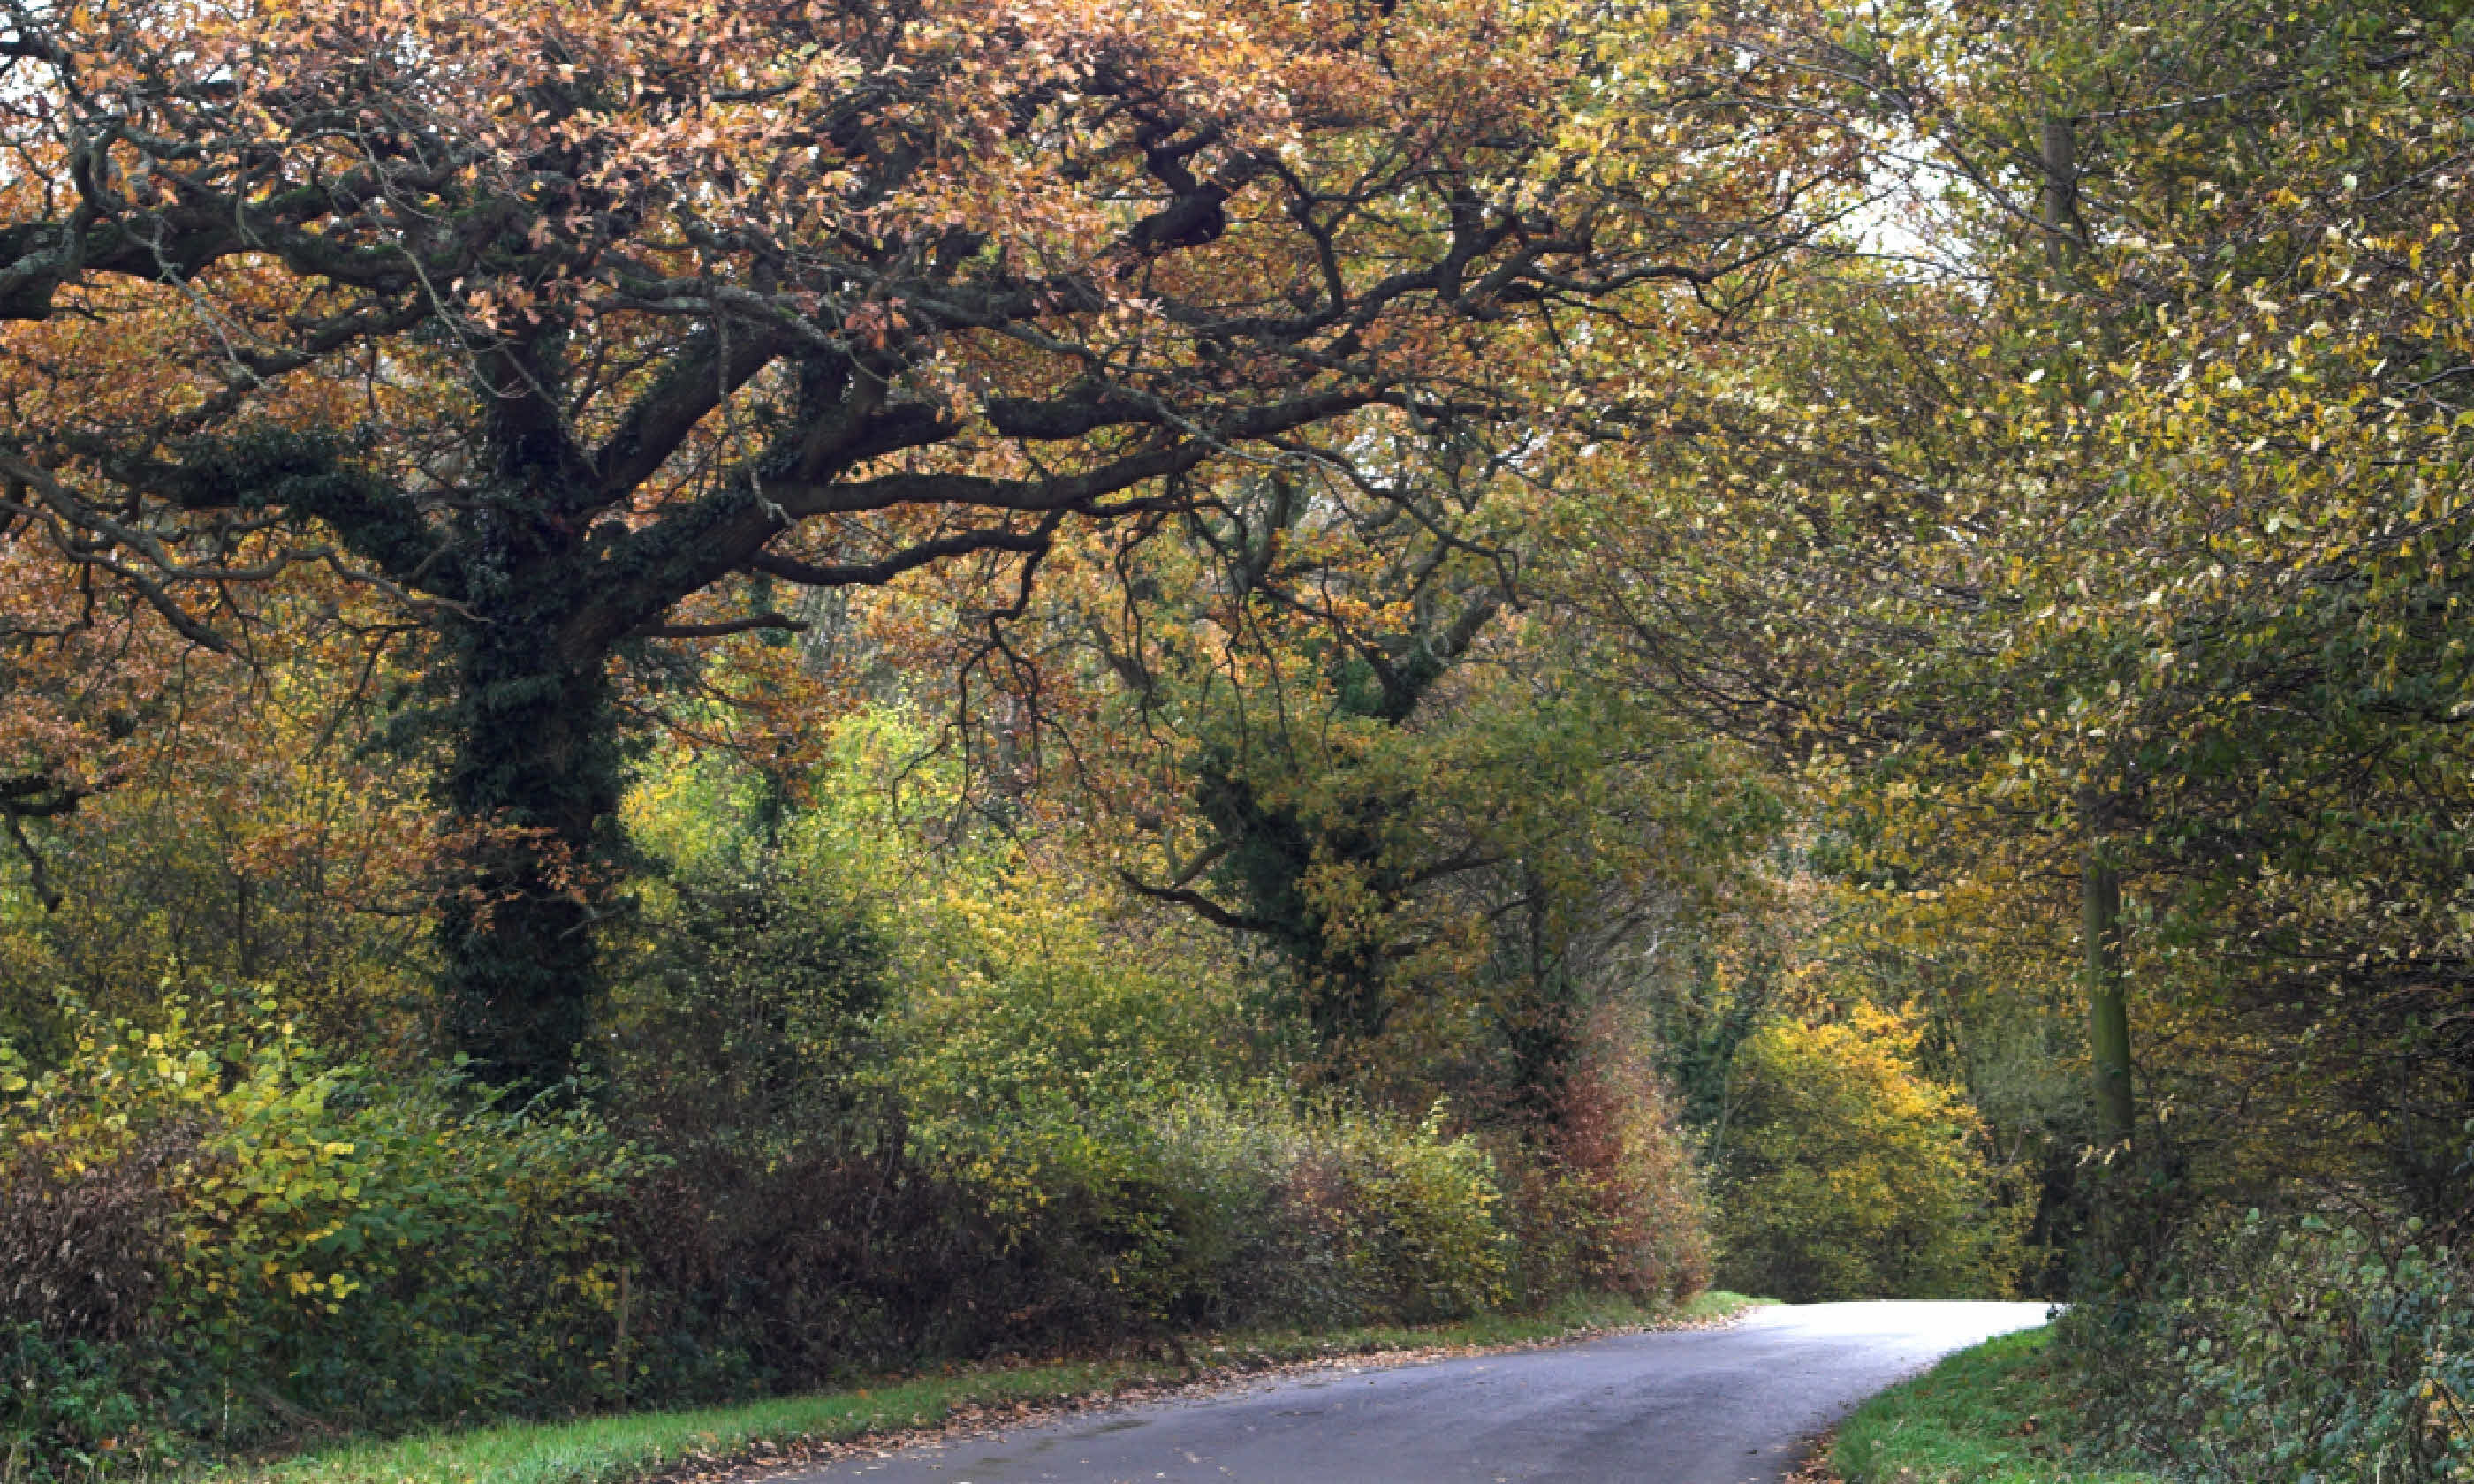 Autumn coloured oak trees in East Sussex (Shutterstock)